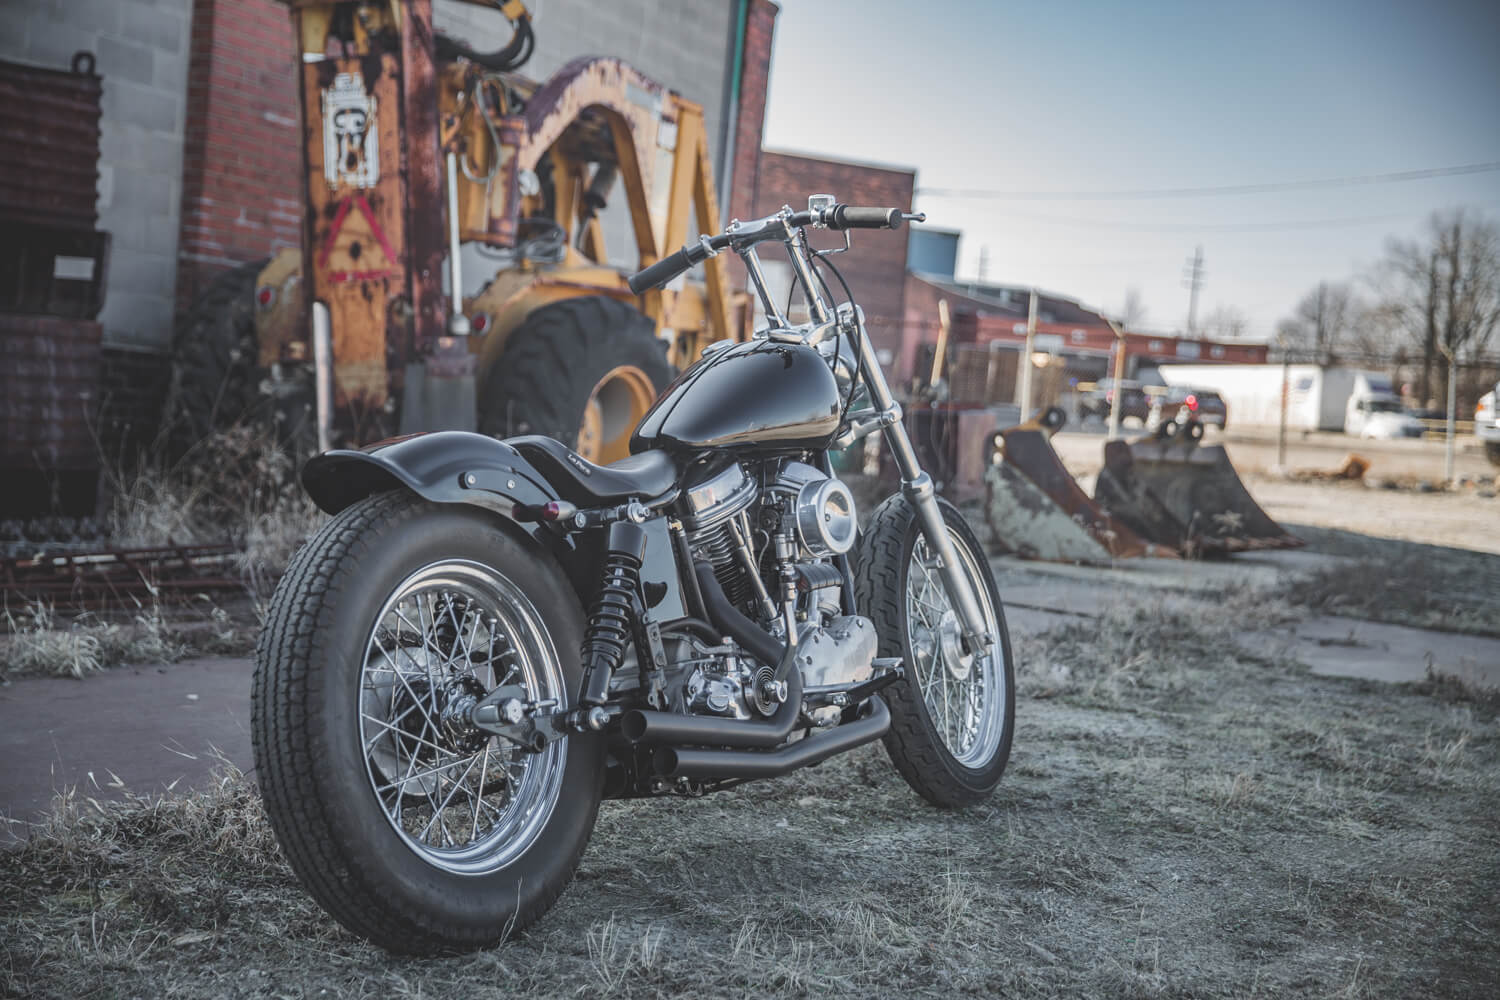 Factory Racer Inspired Gas Tanks For Custom Harley-Davidson Motorcycles